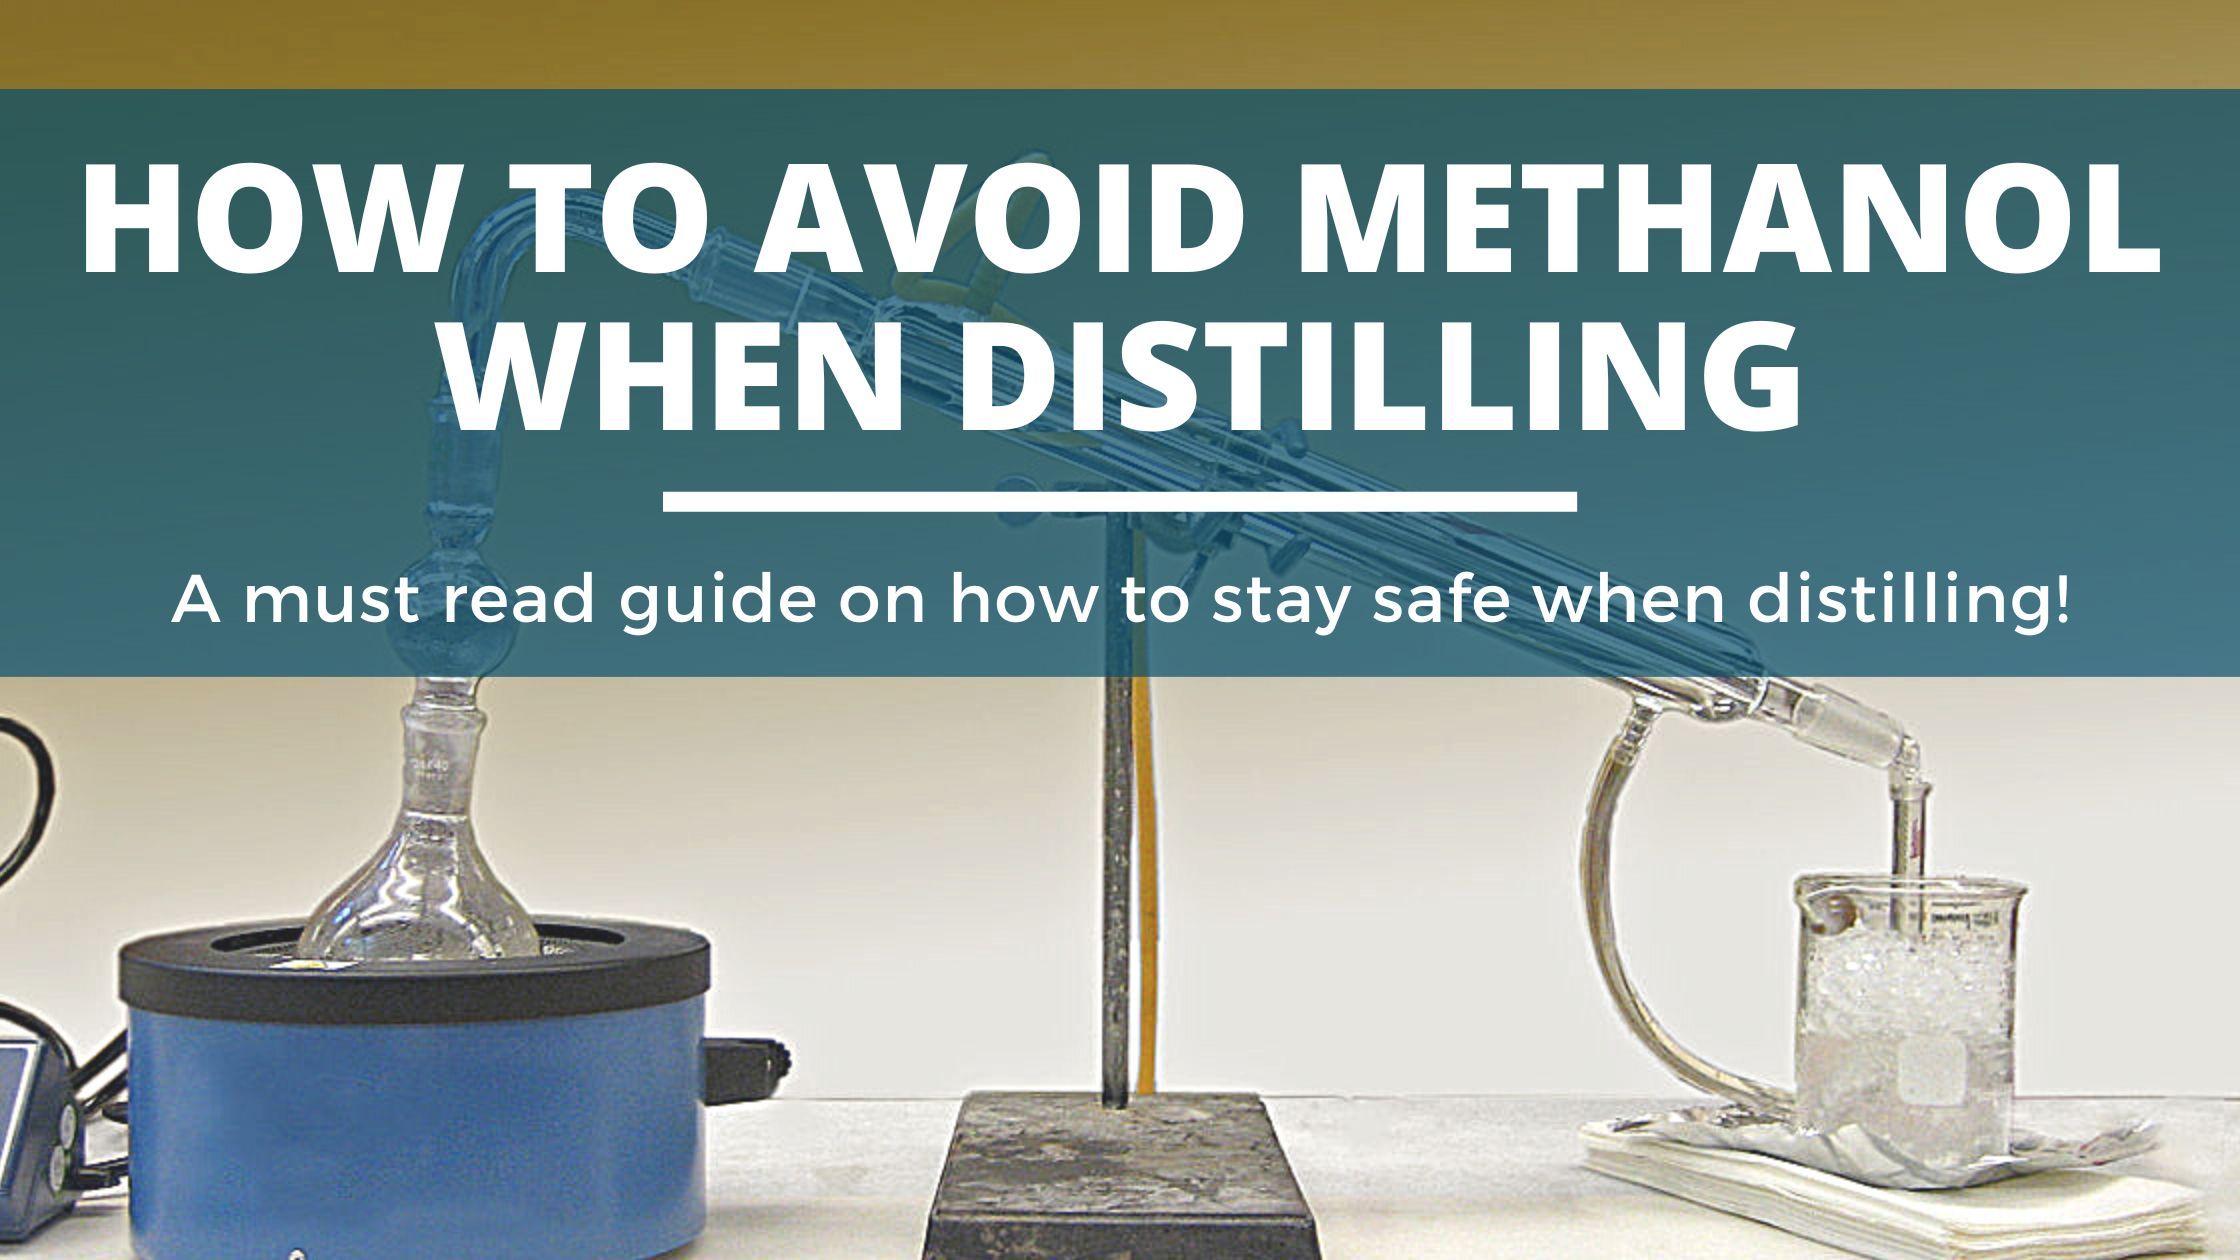 Image of 64diy distilling how to avoid methanol when distilling